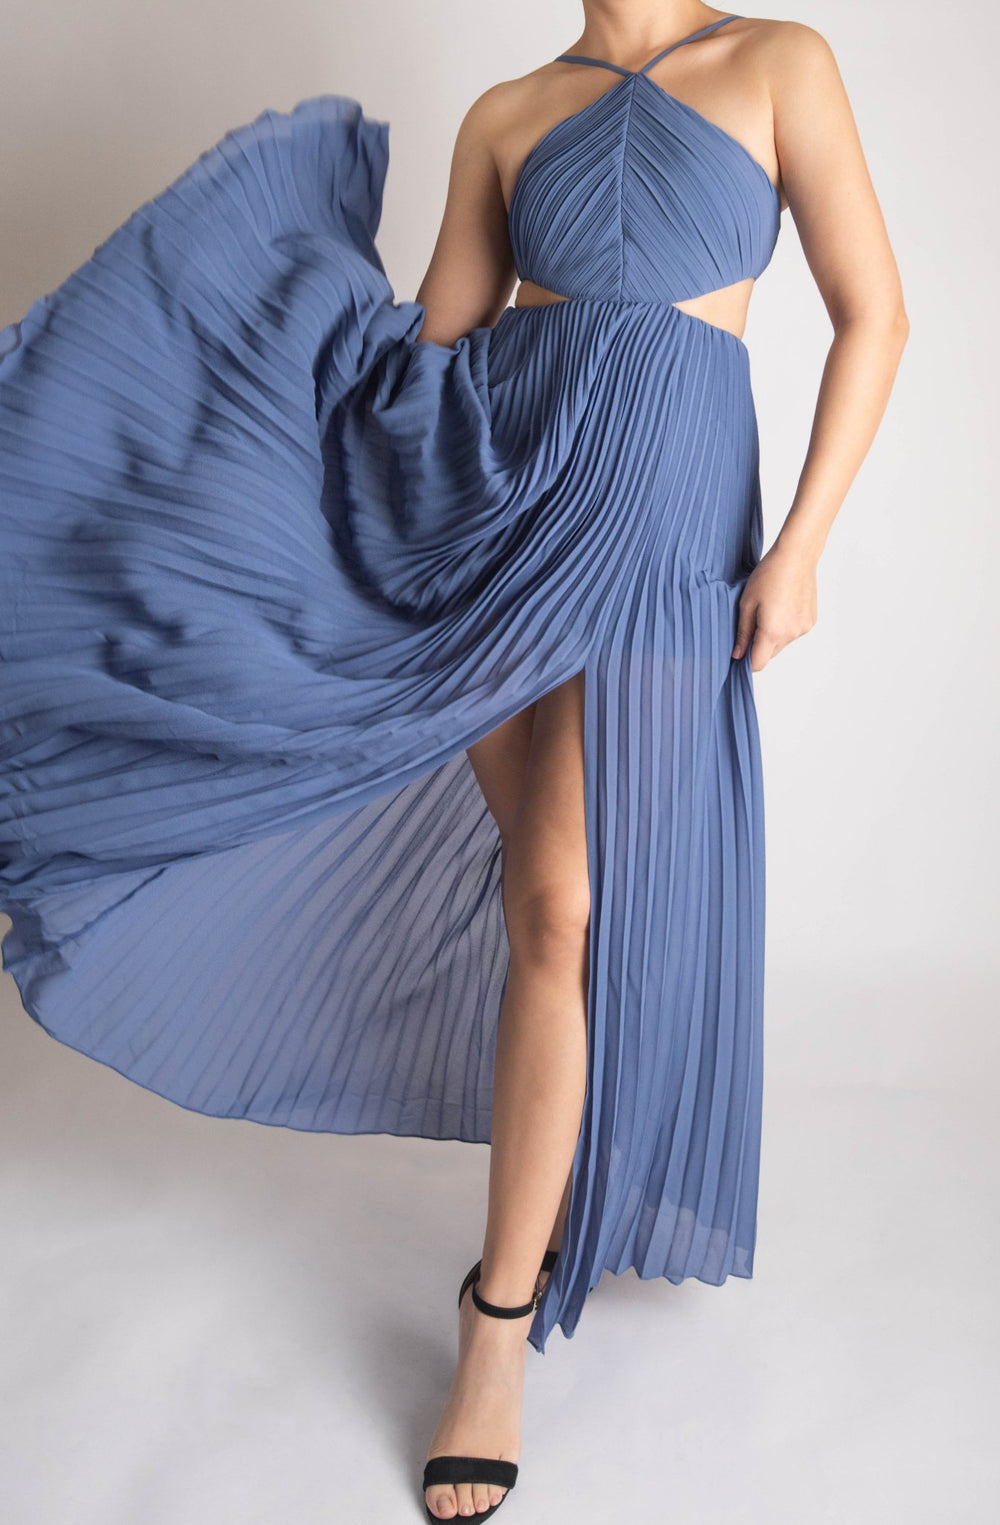 Cressida - azul - Lend the Trend renta de vestidos mexico